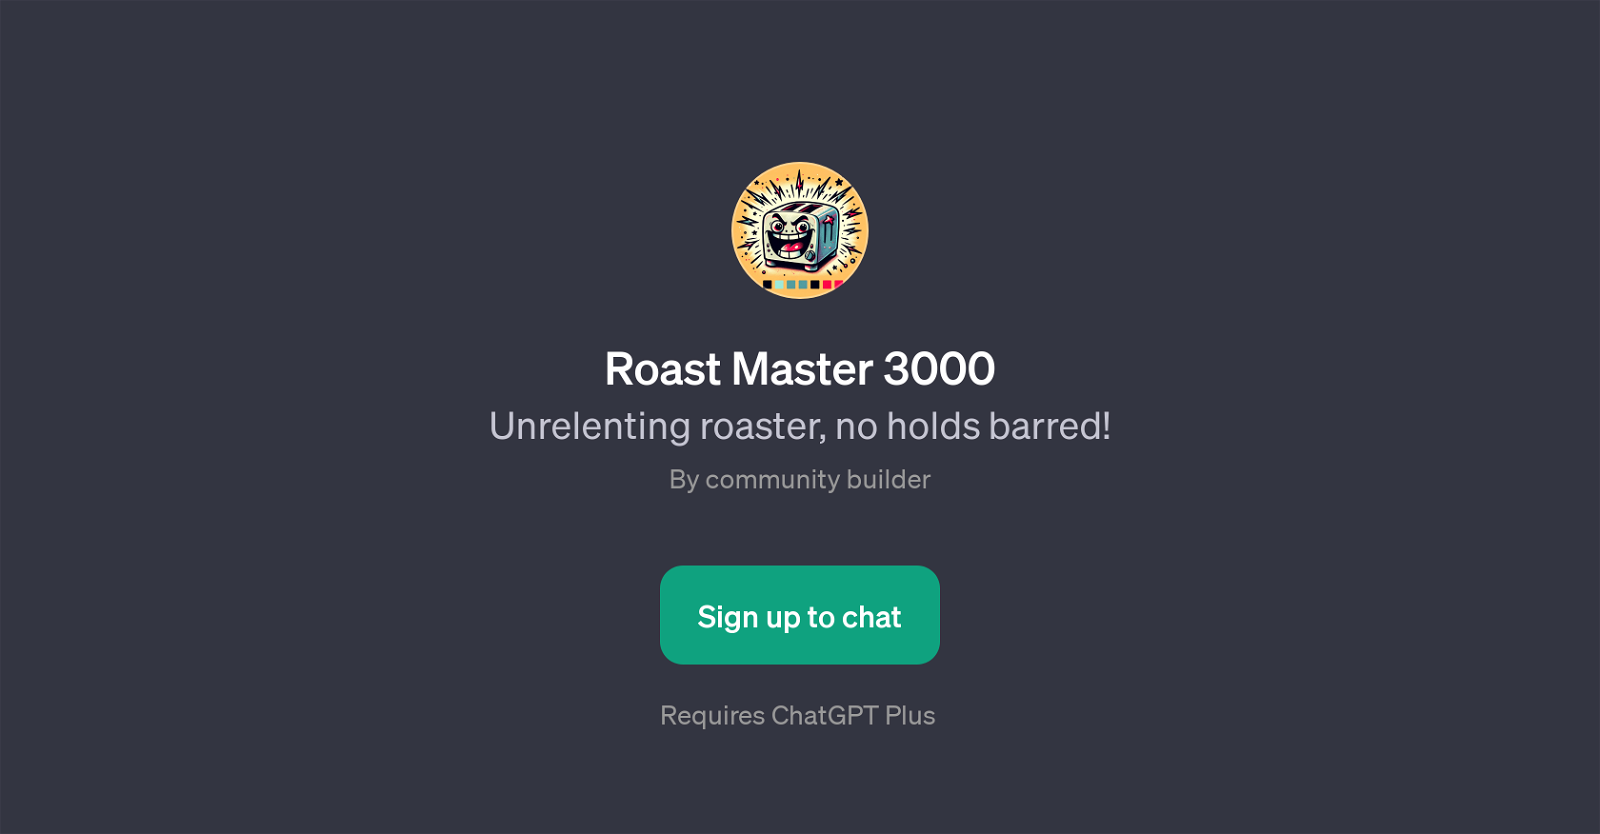 Roast Master 3000 website